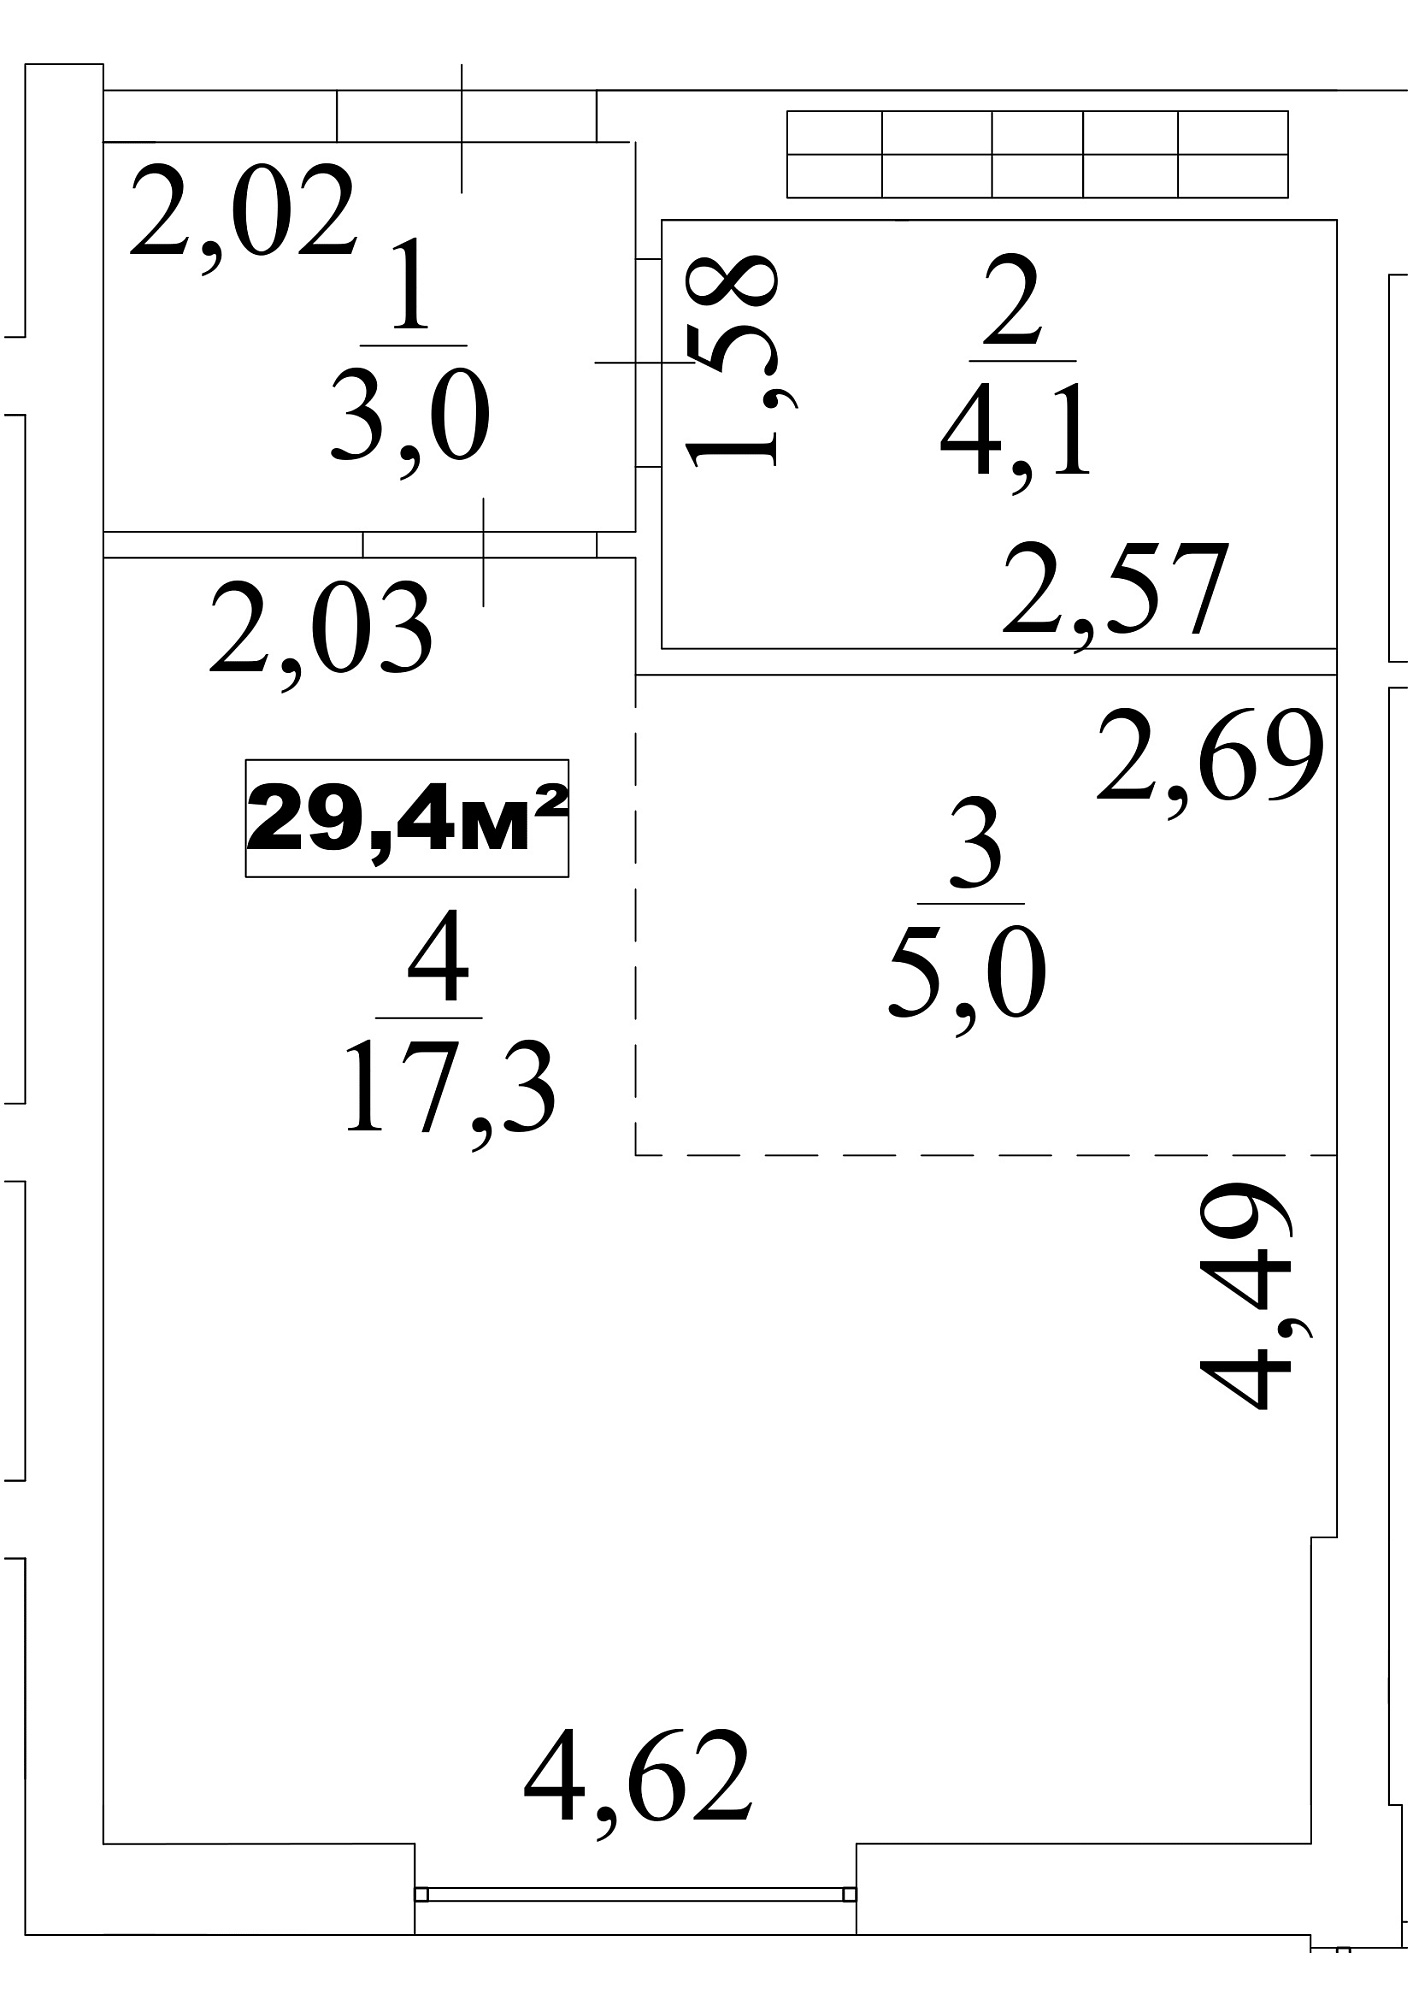 Planning Smart flats area 29.4m2, AB-10-03/00027.